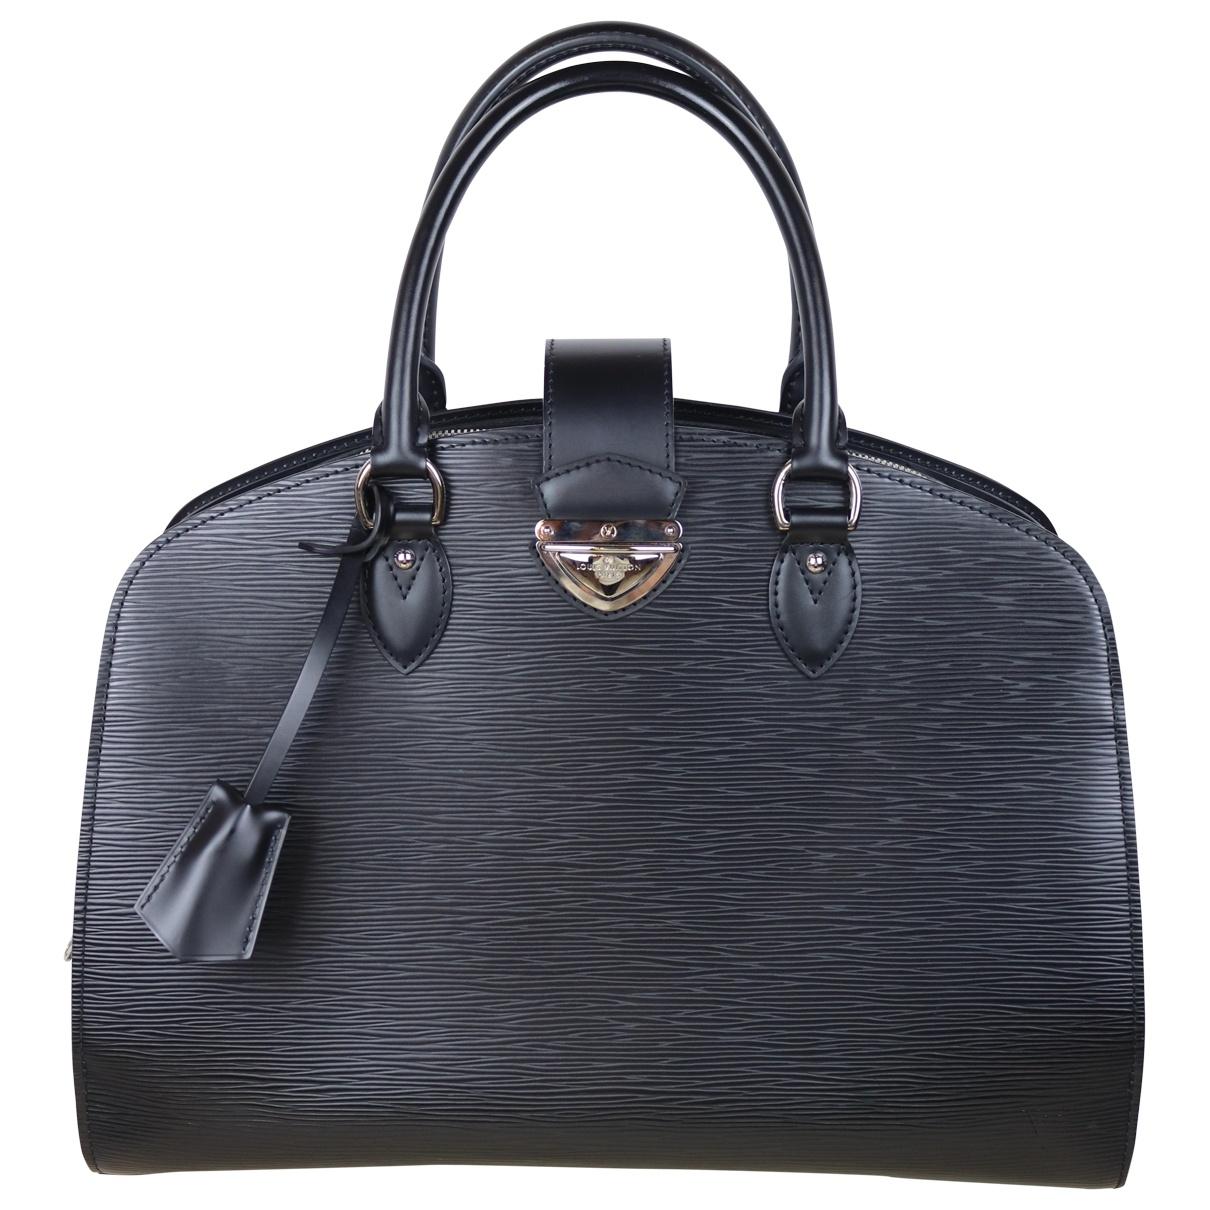 Lyst - Louis Vuitton Pont Neuf Black Leather Handbag in Black